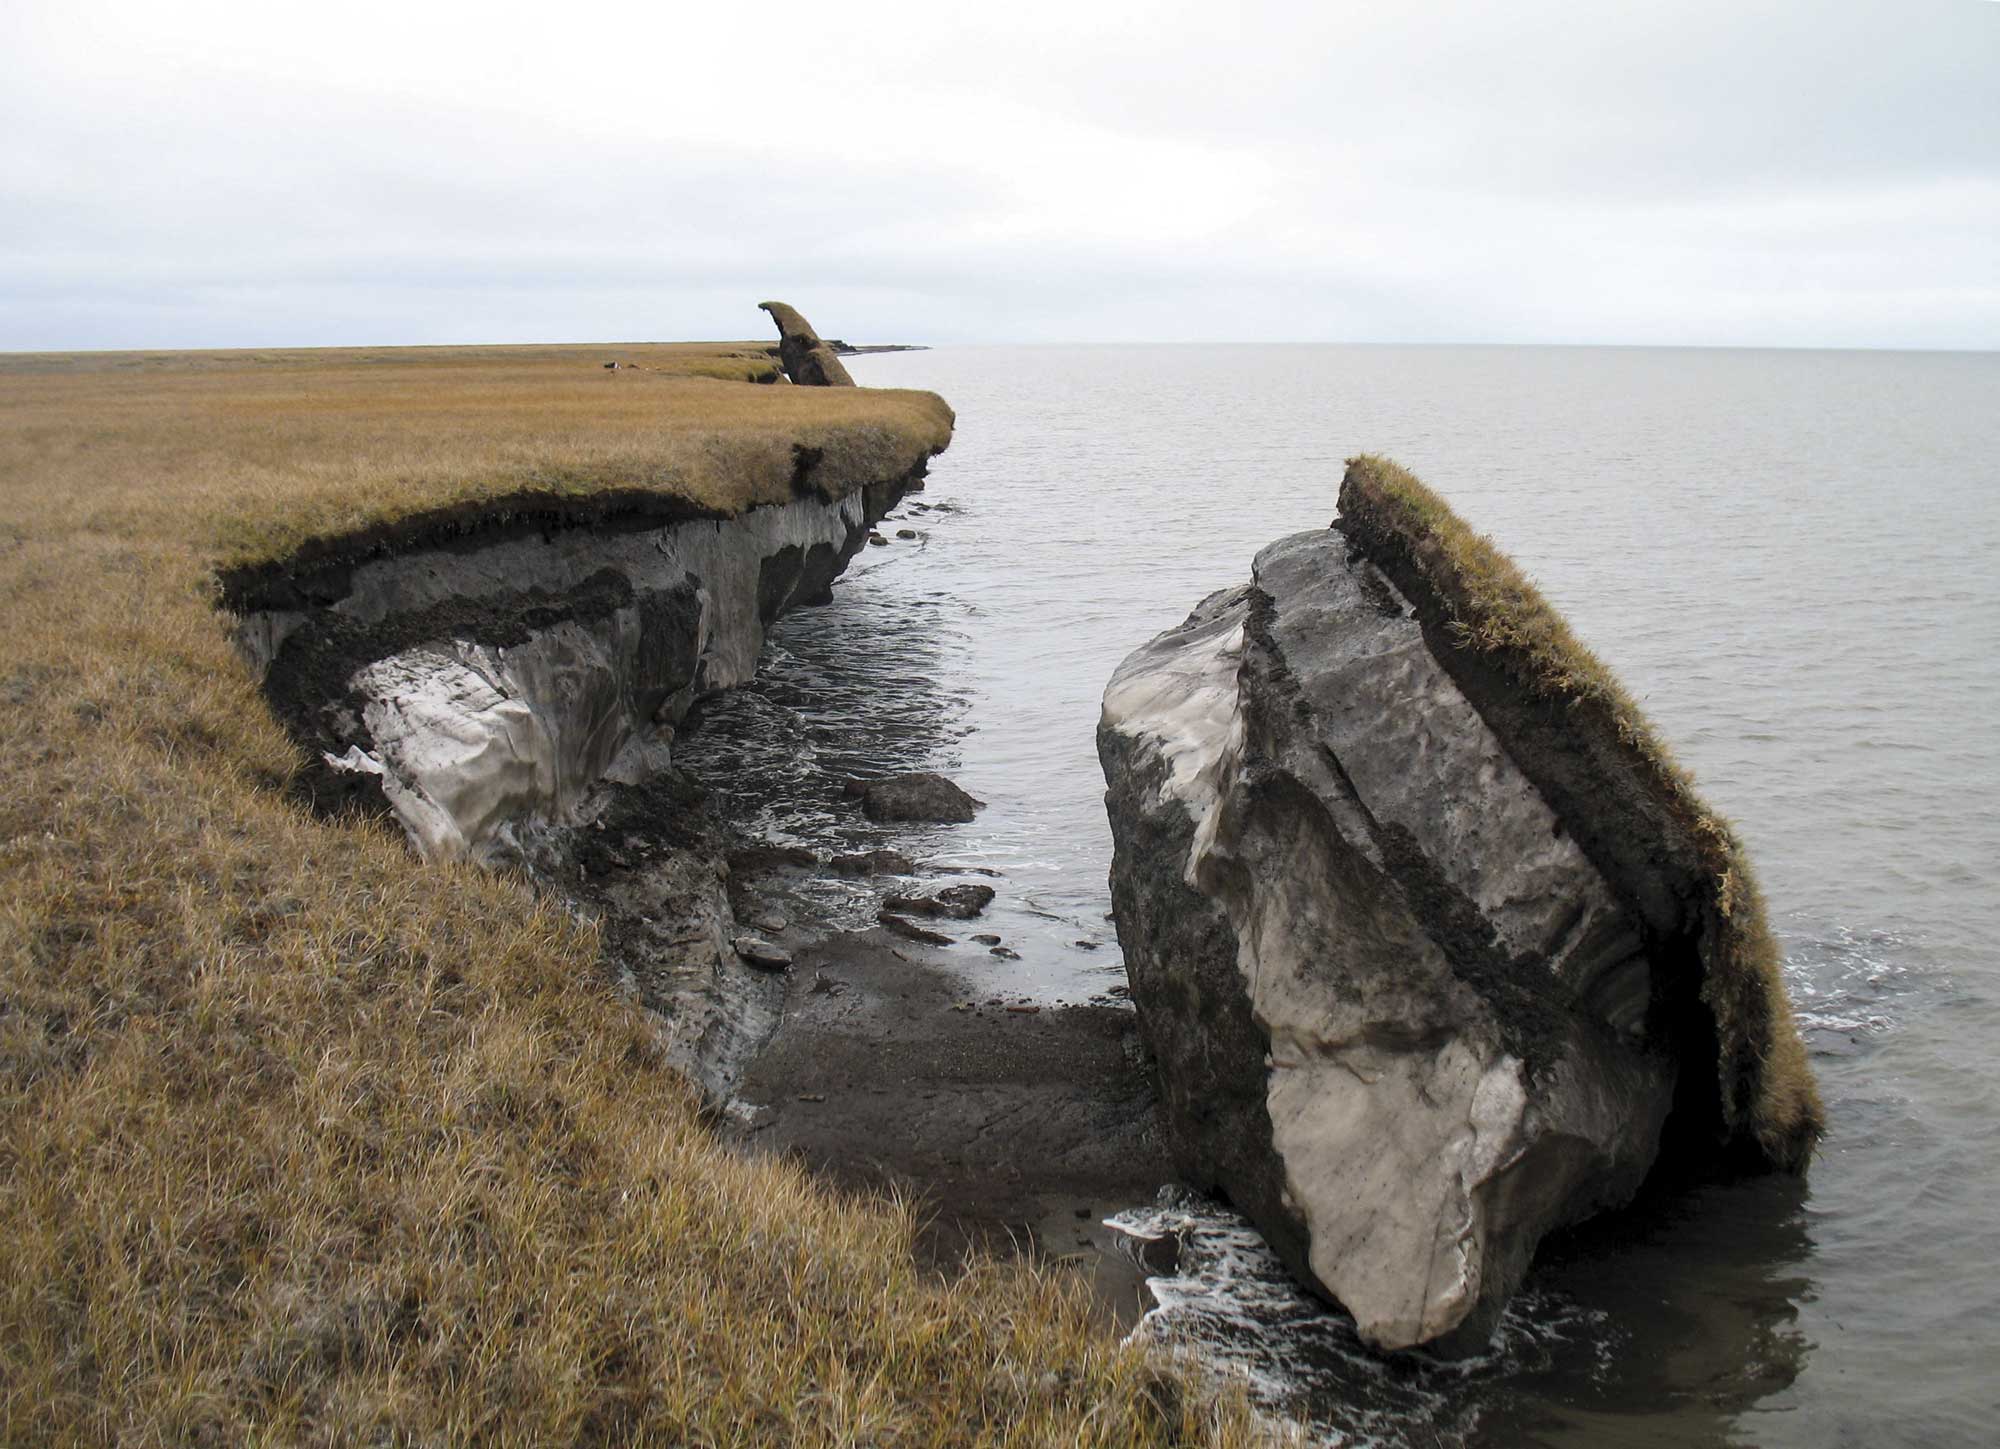 A block of permafrost that has fallen into the ocean on the Alaska coast.